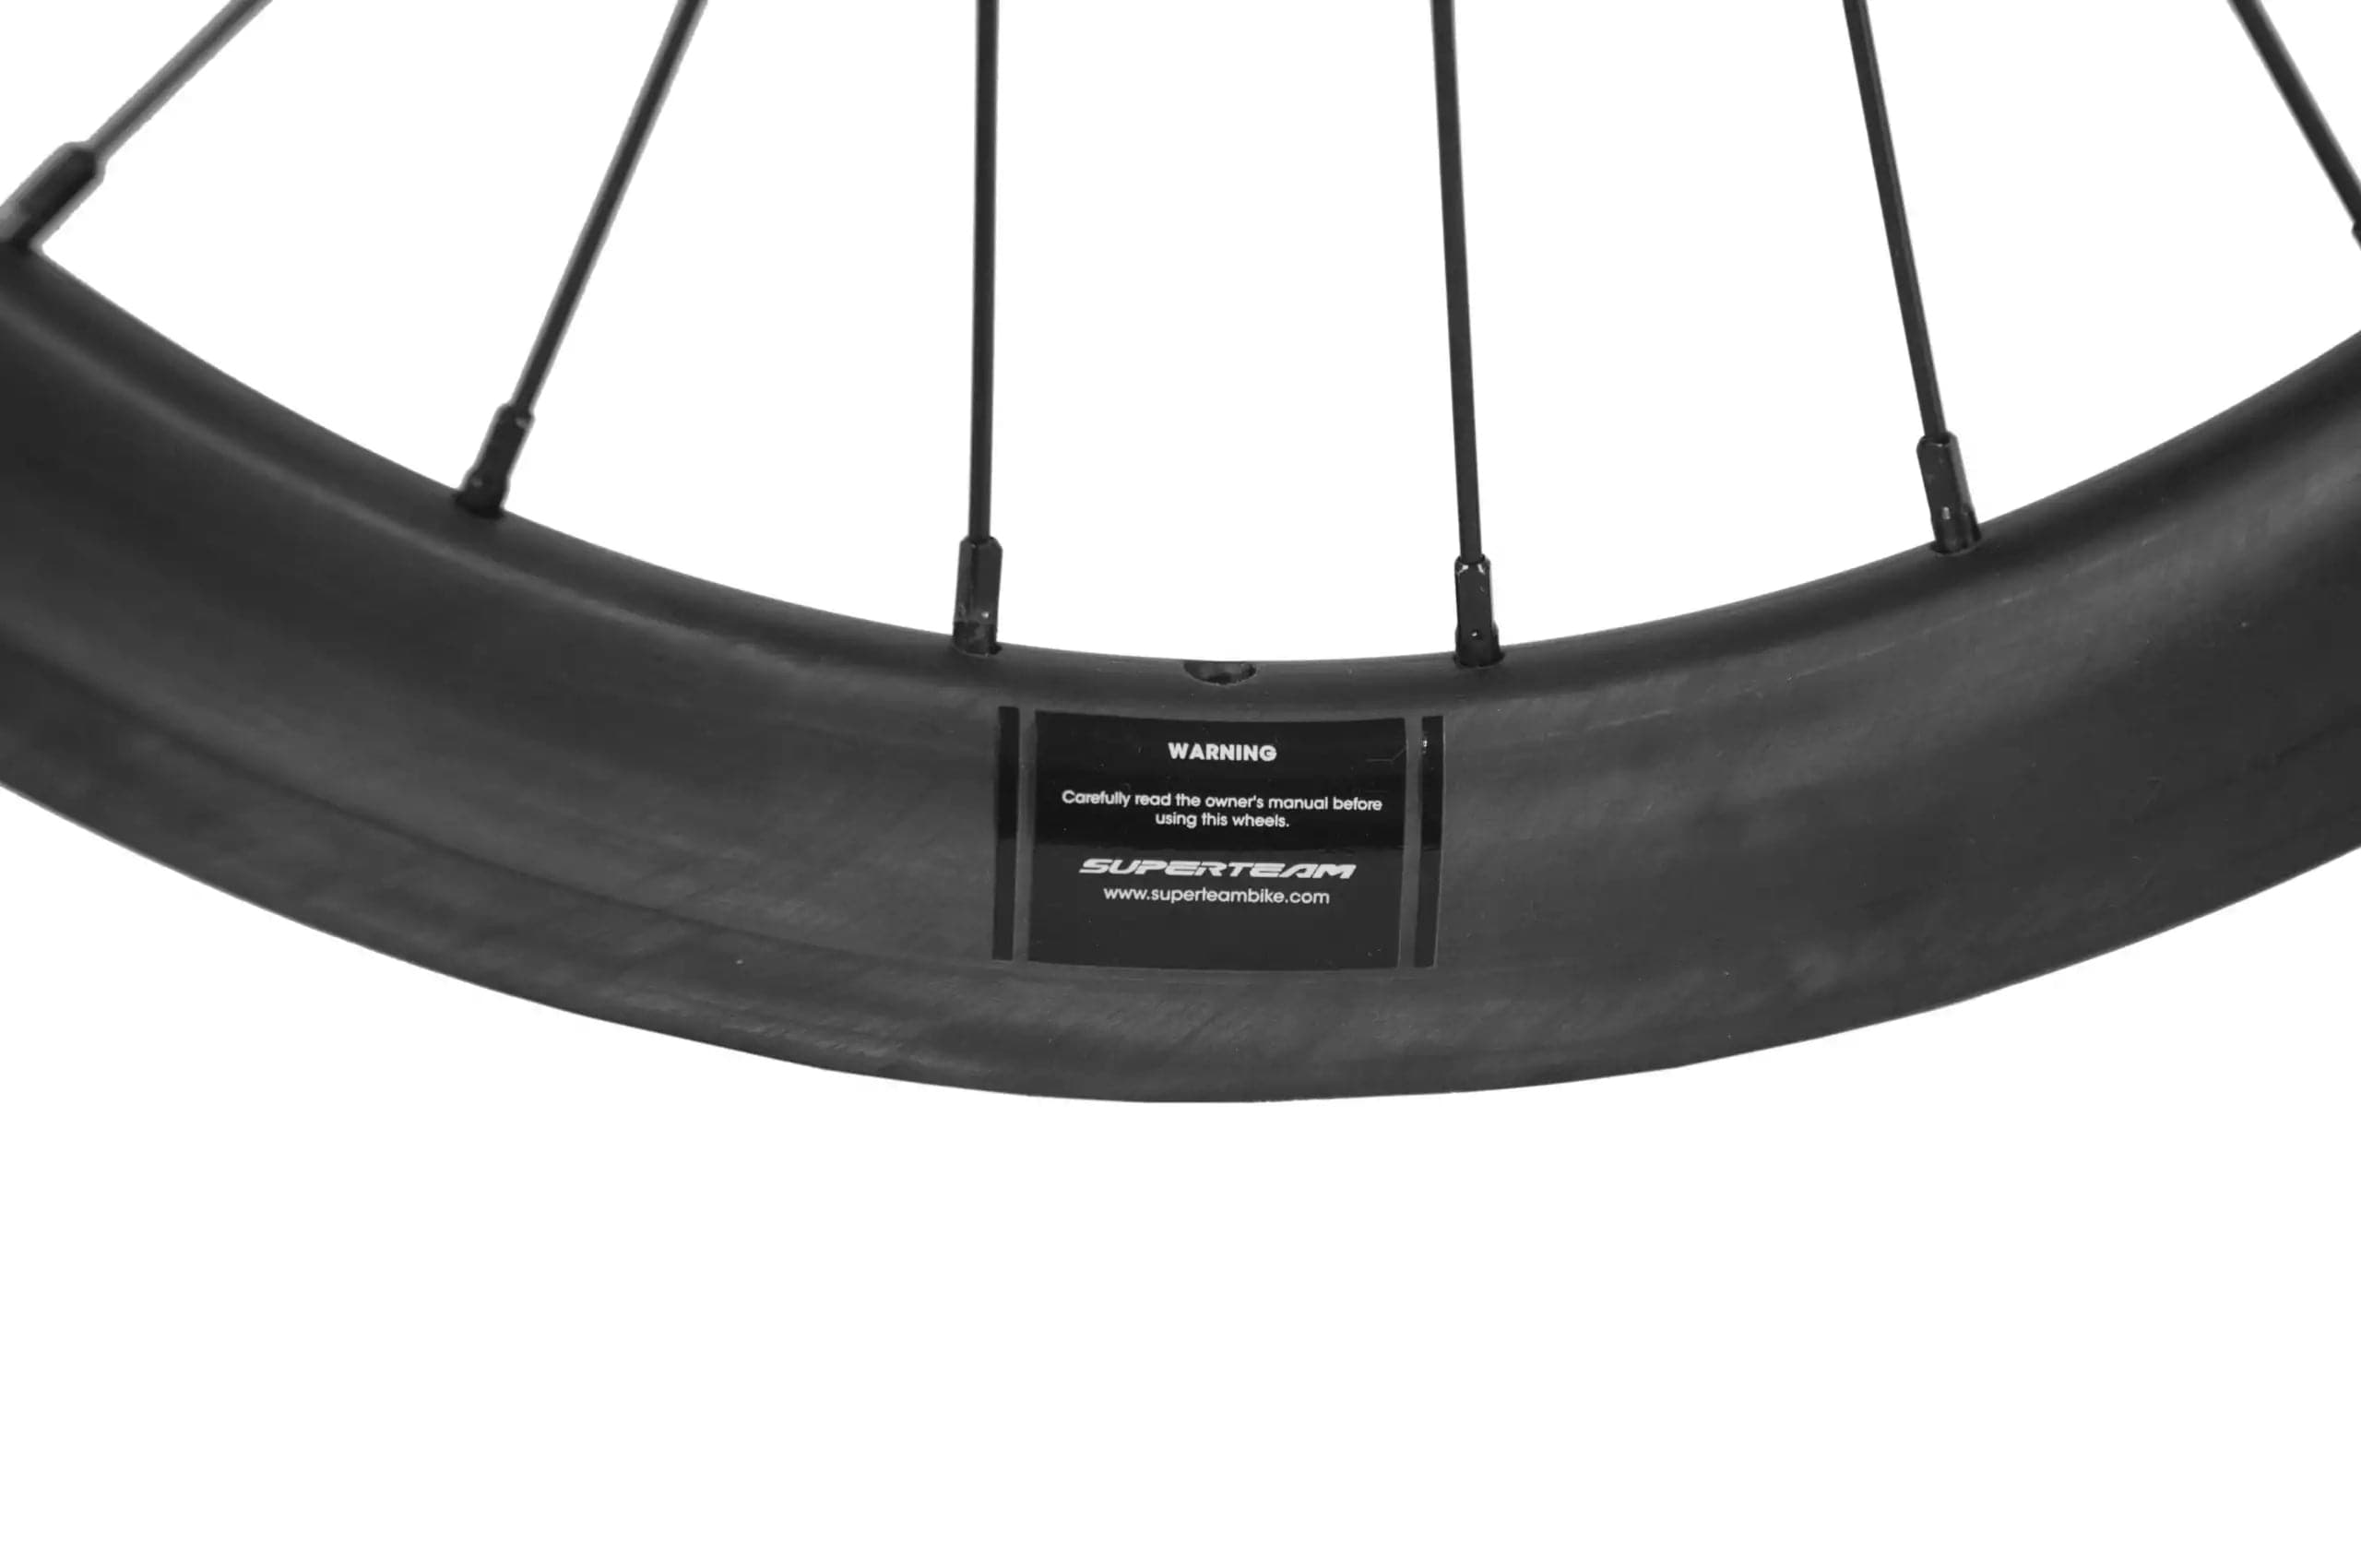 BMX451 Carbon Wheelset 23-50 Rim Brake - Superteamwheels